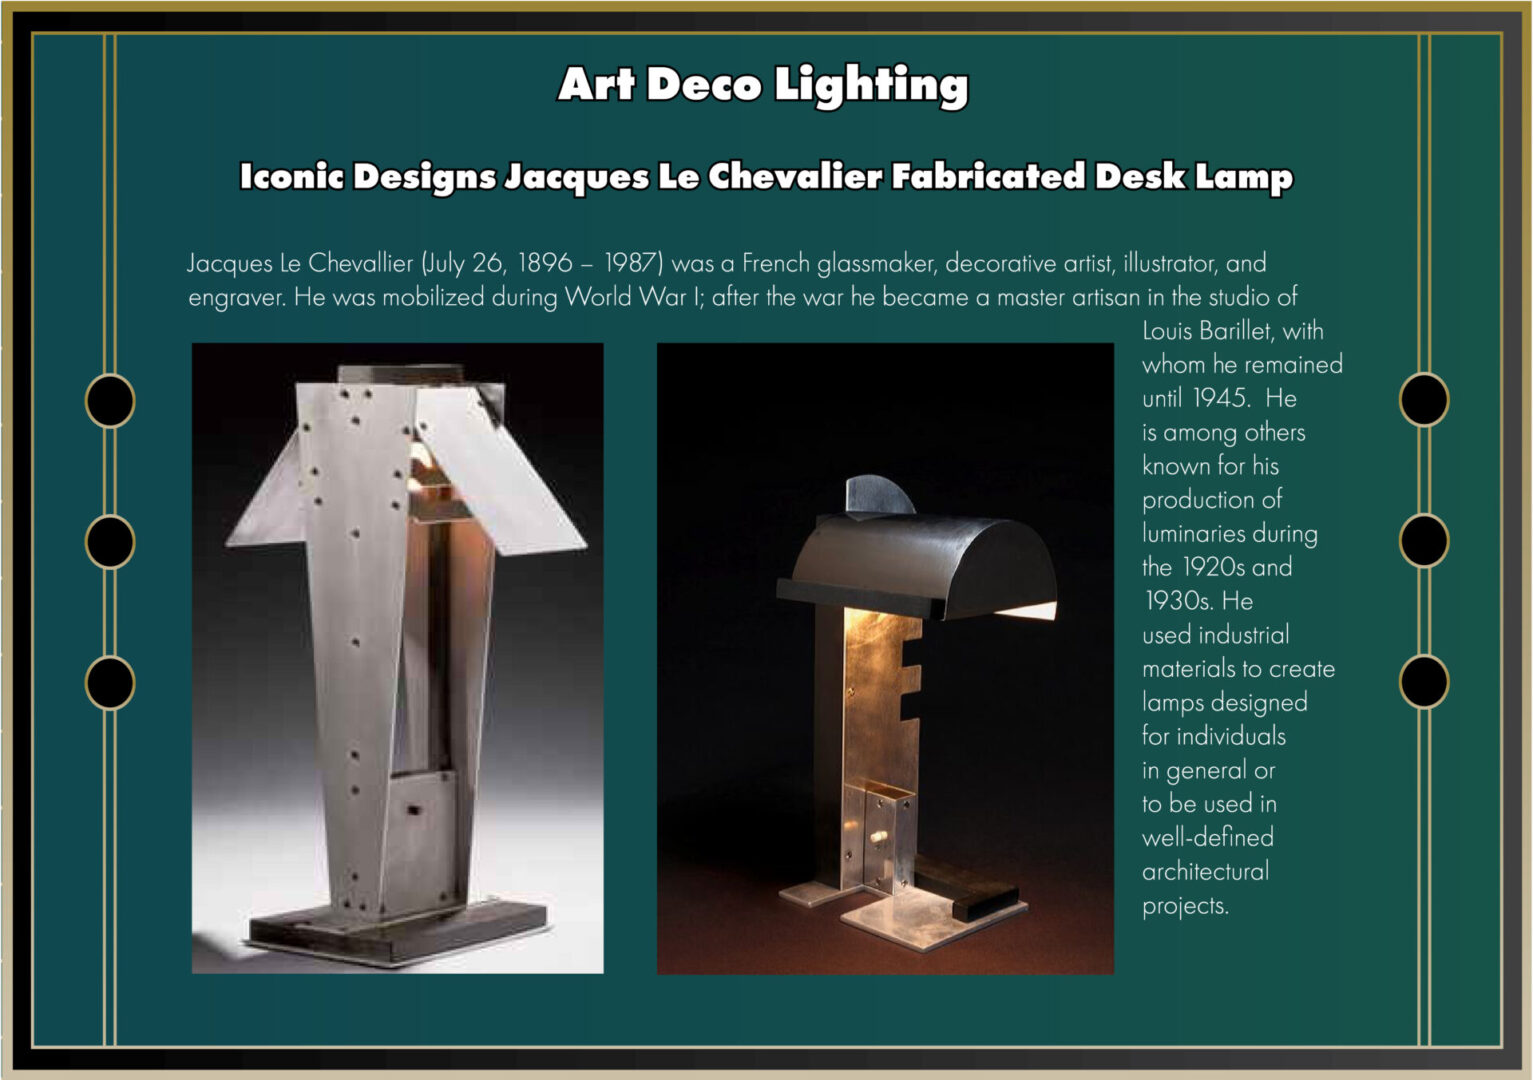 Jacques Le Chevalier fabricated Desk Lamp